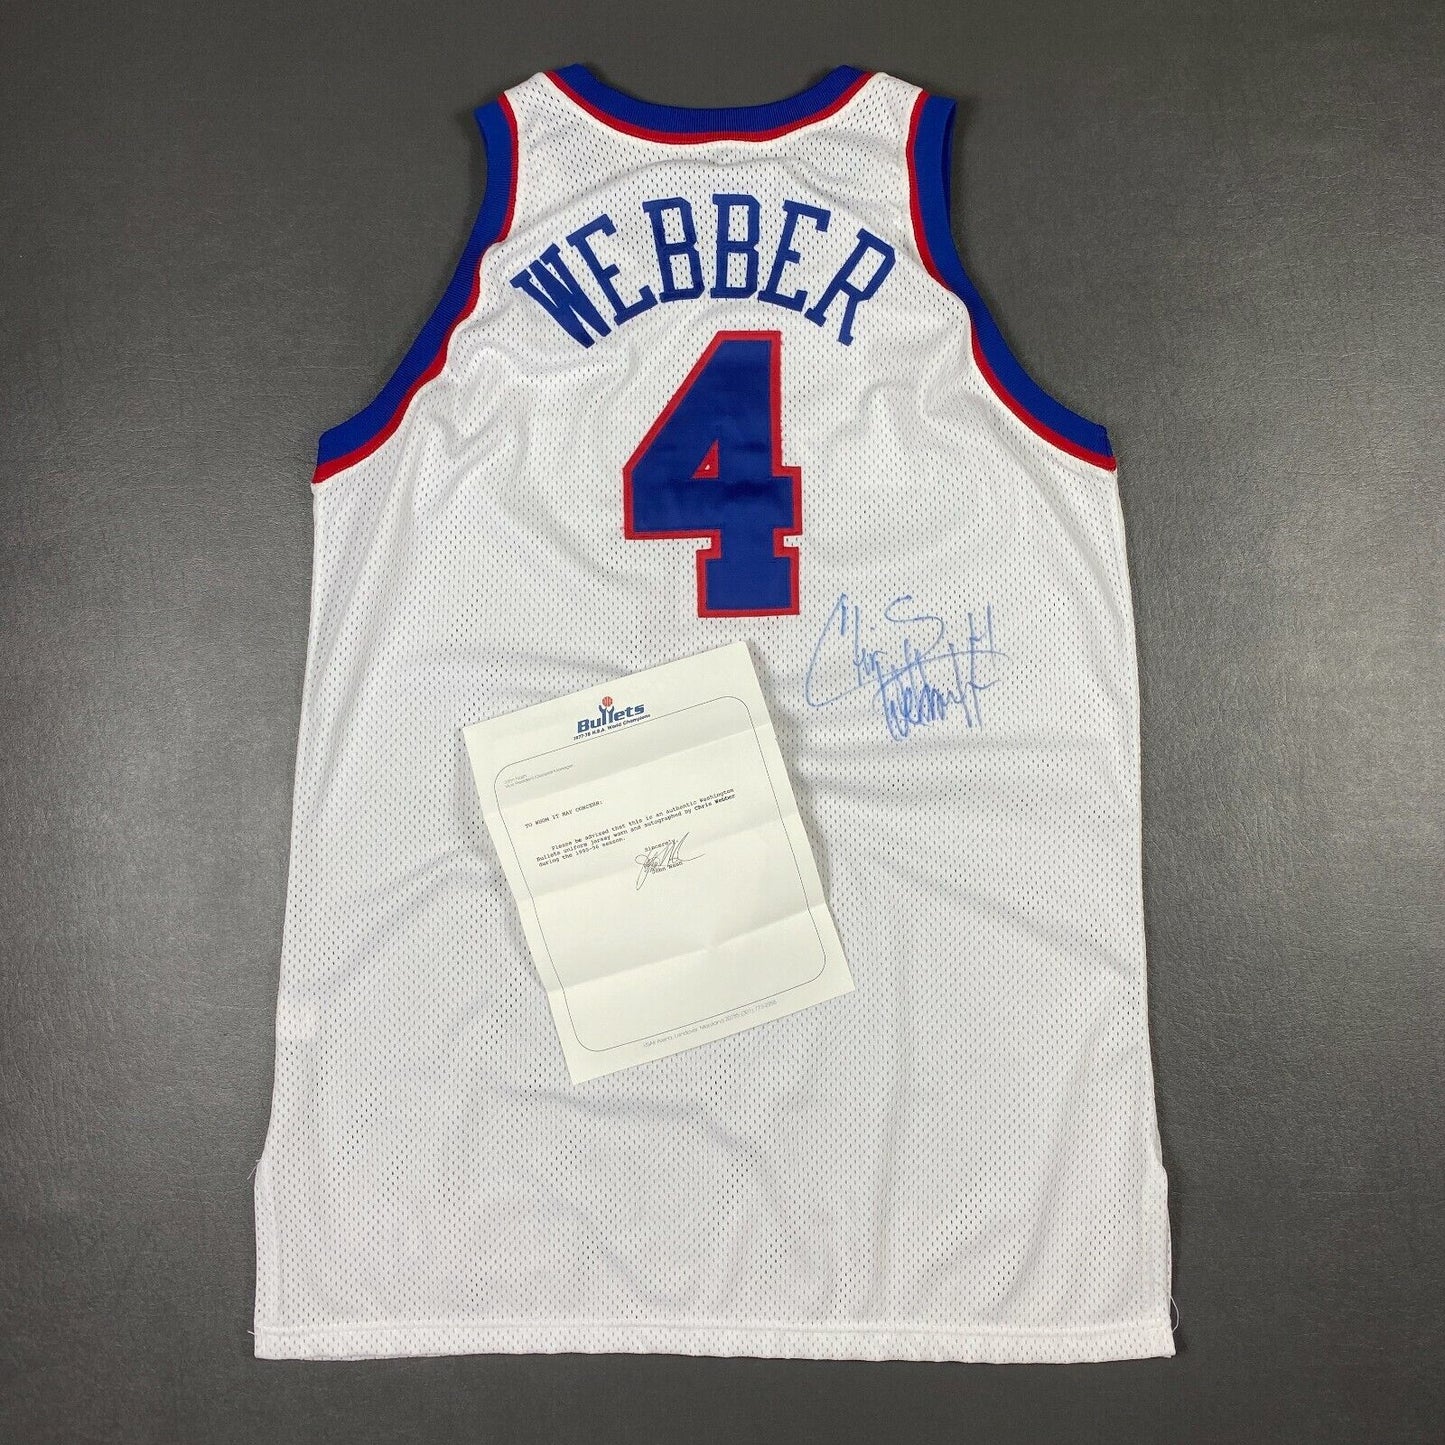 100% Authentic Chris Webber Vintage Champion 96 Signed Bullets Game Worn Jersey